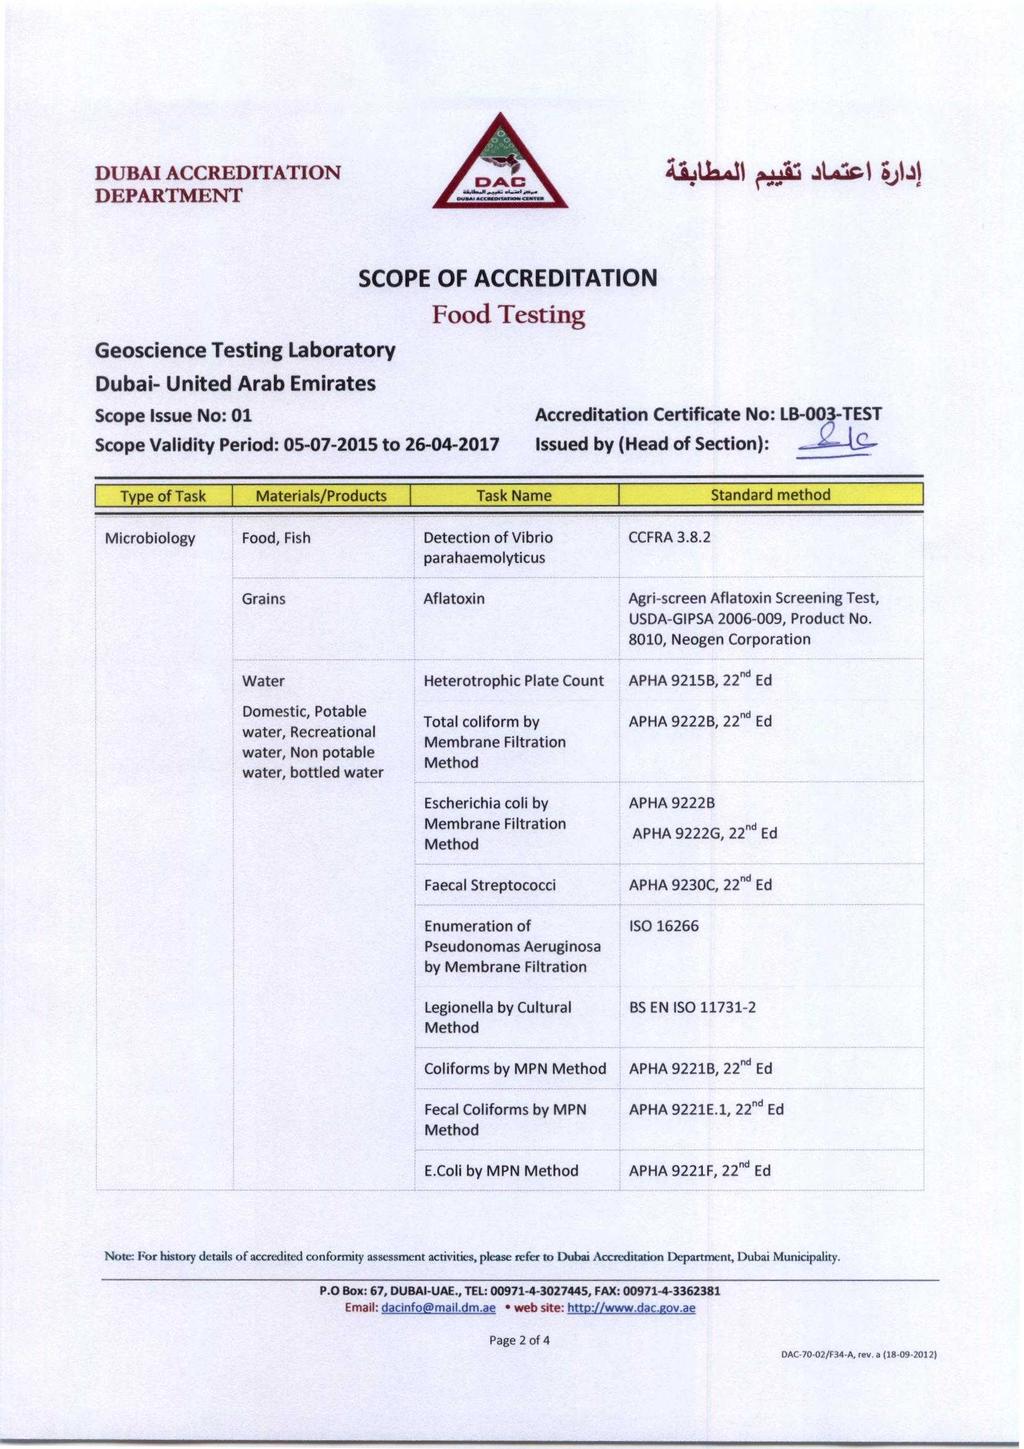 DUBAI ACCREDITATION DEPARTMENT SCOPE OF ACCREDITATION Food Testing Geoscience Testing Laboratory Dubai- United Arab Emirates Scope Issue No: 01 Accreditation Certificate No: LB-00 4-TEST Scope